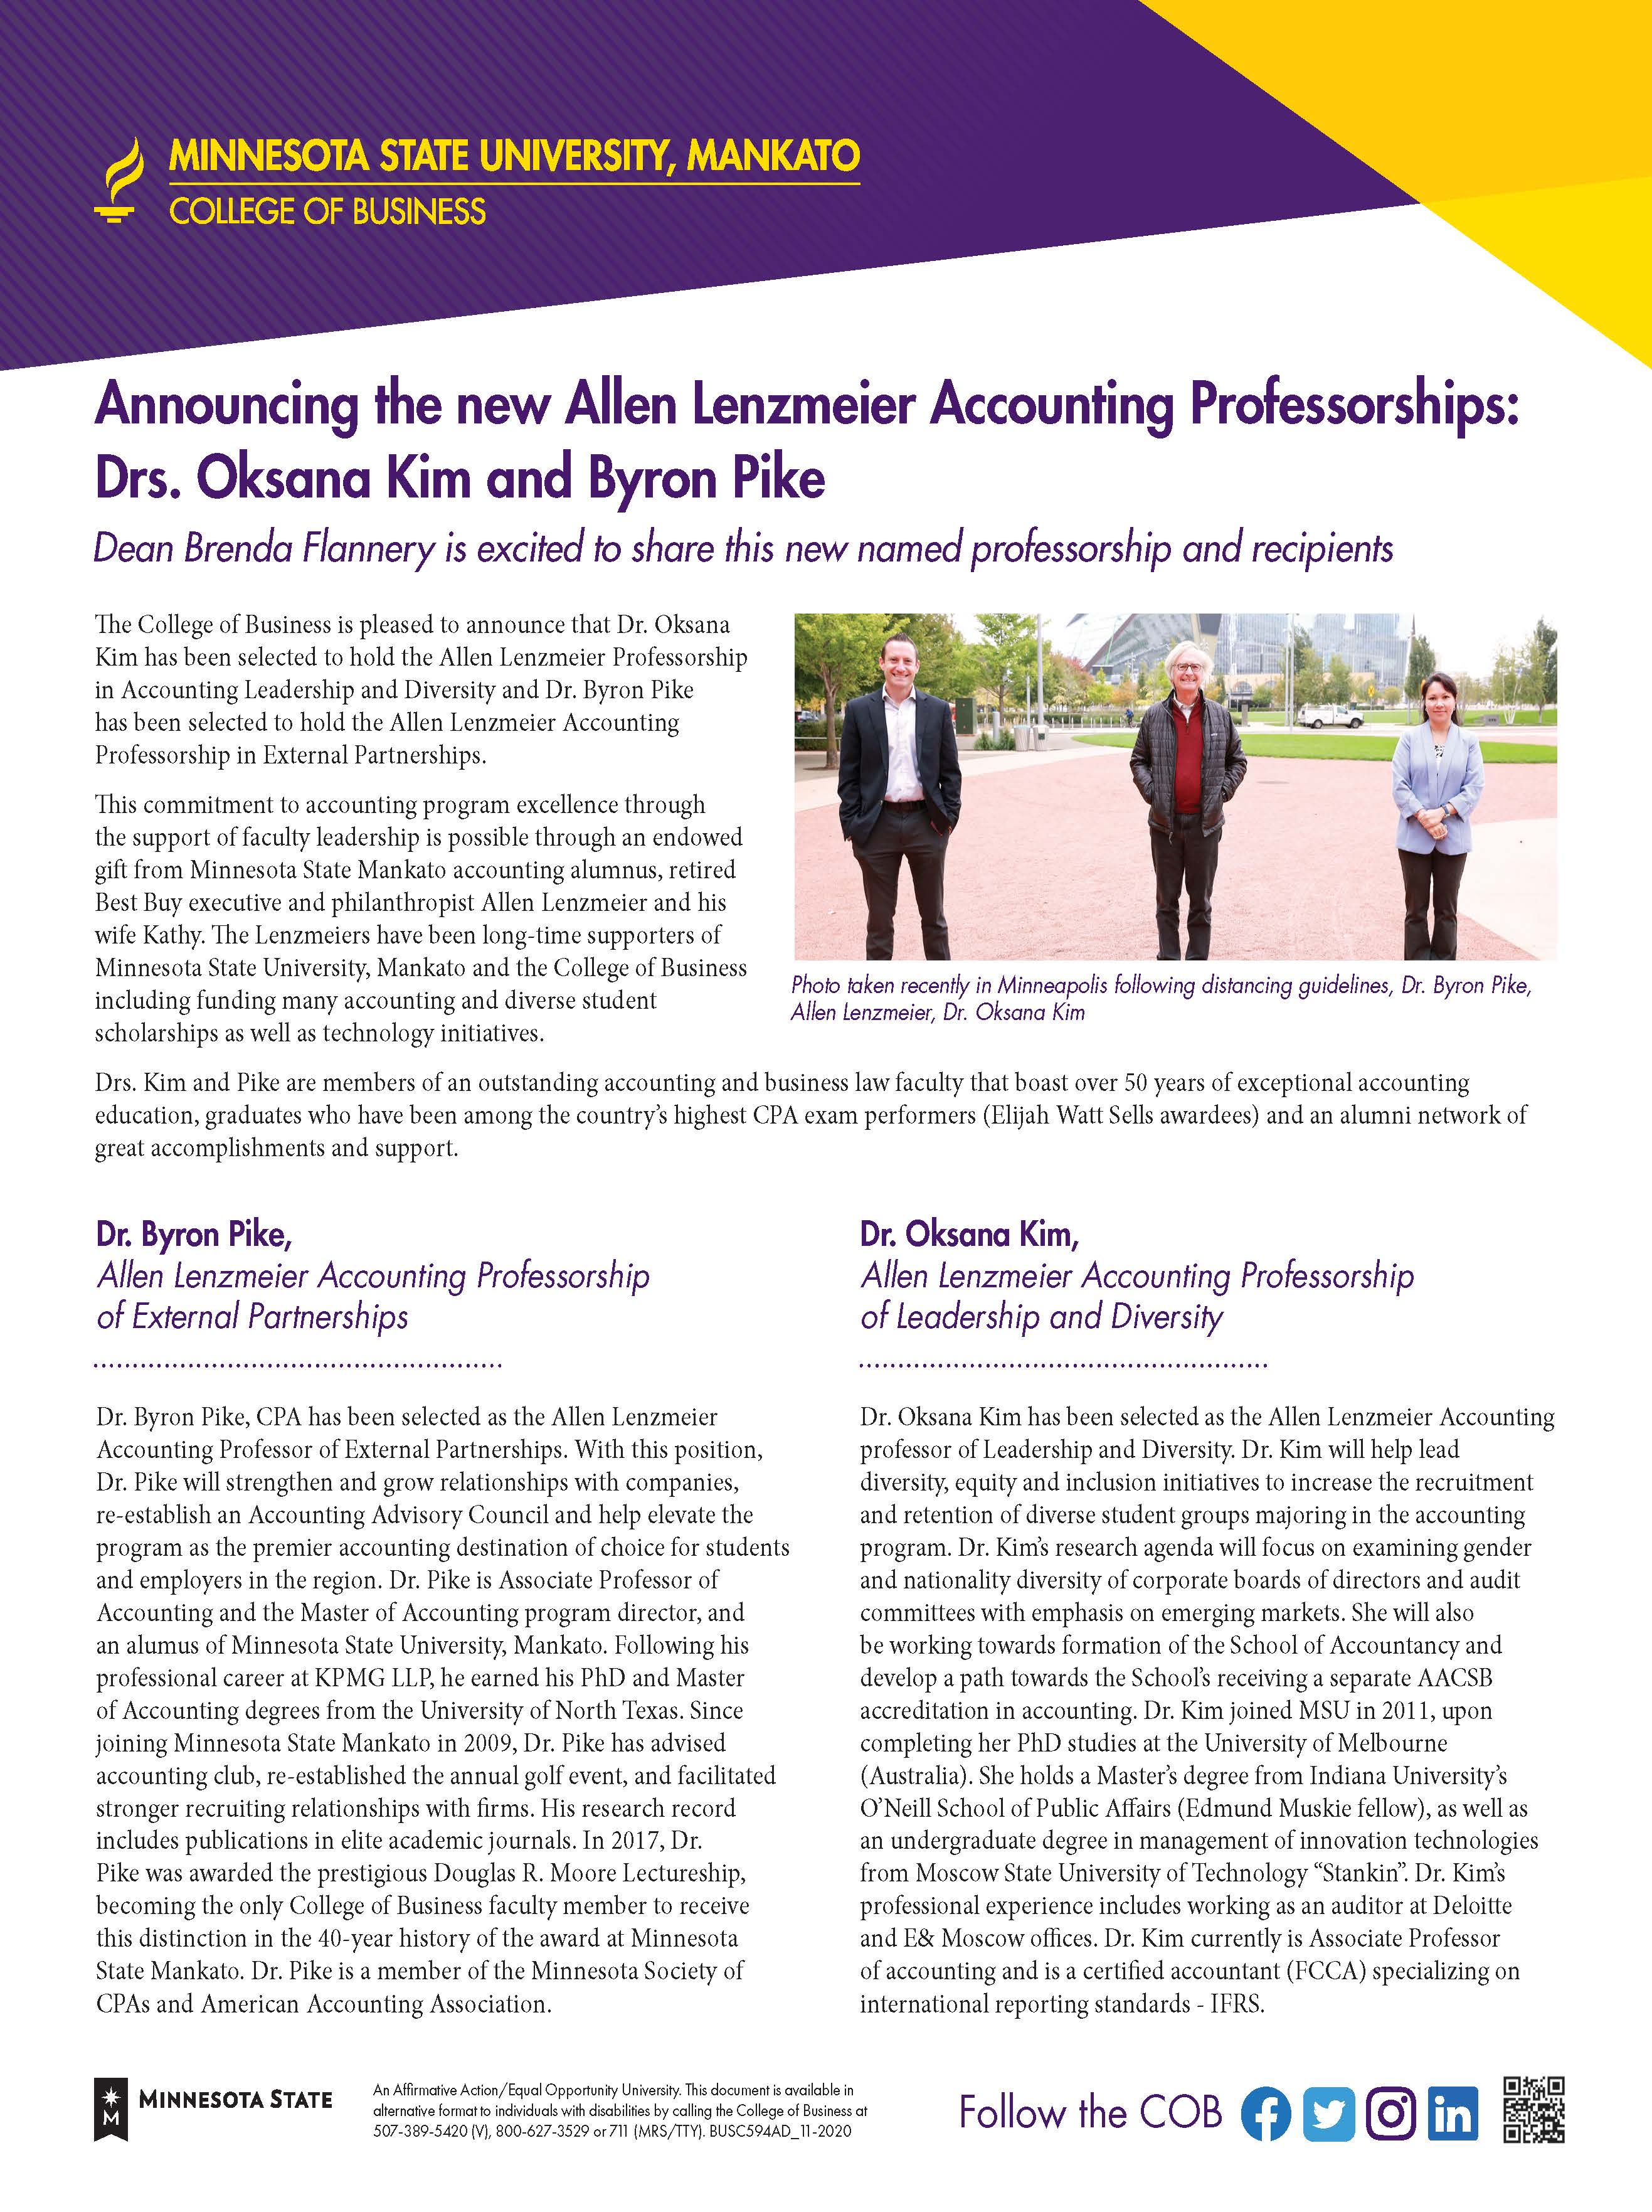 Announcing the new Allen Lenzmeier Accounting Professorships- MN Valley Business Magazine December 2020